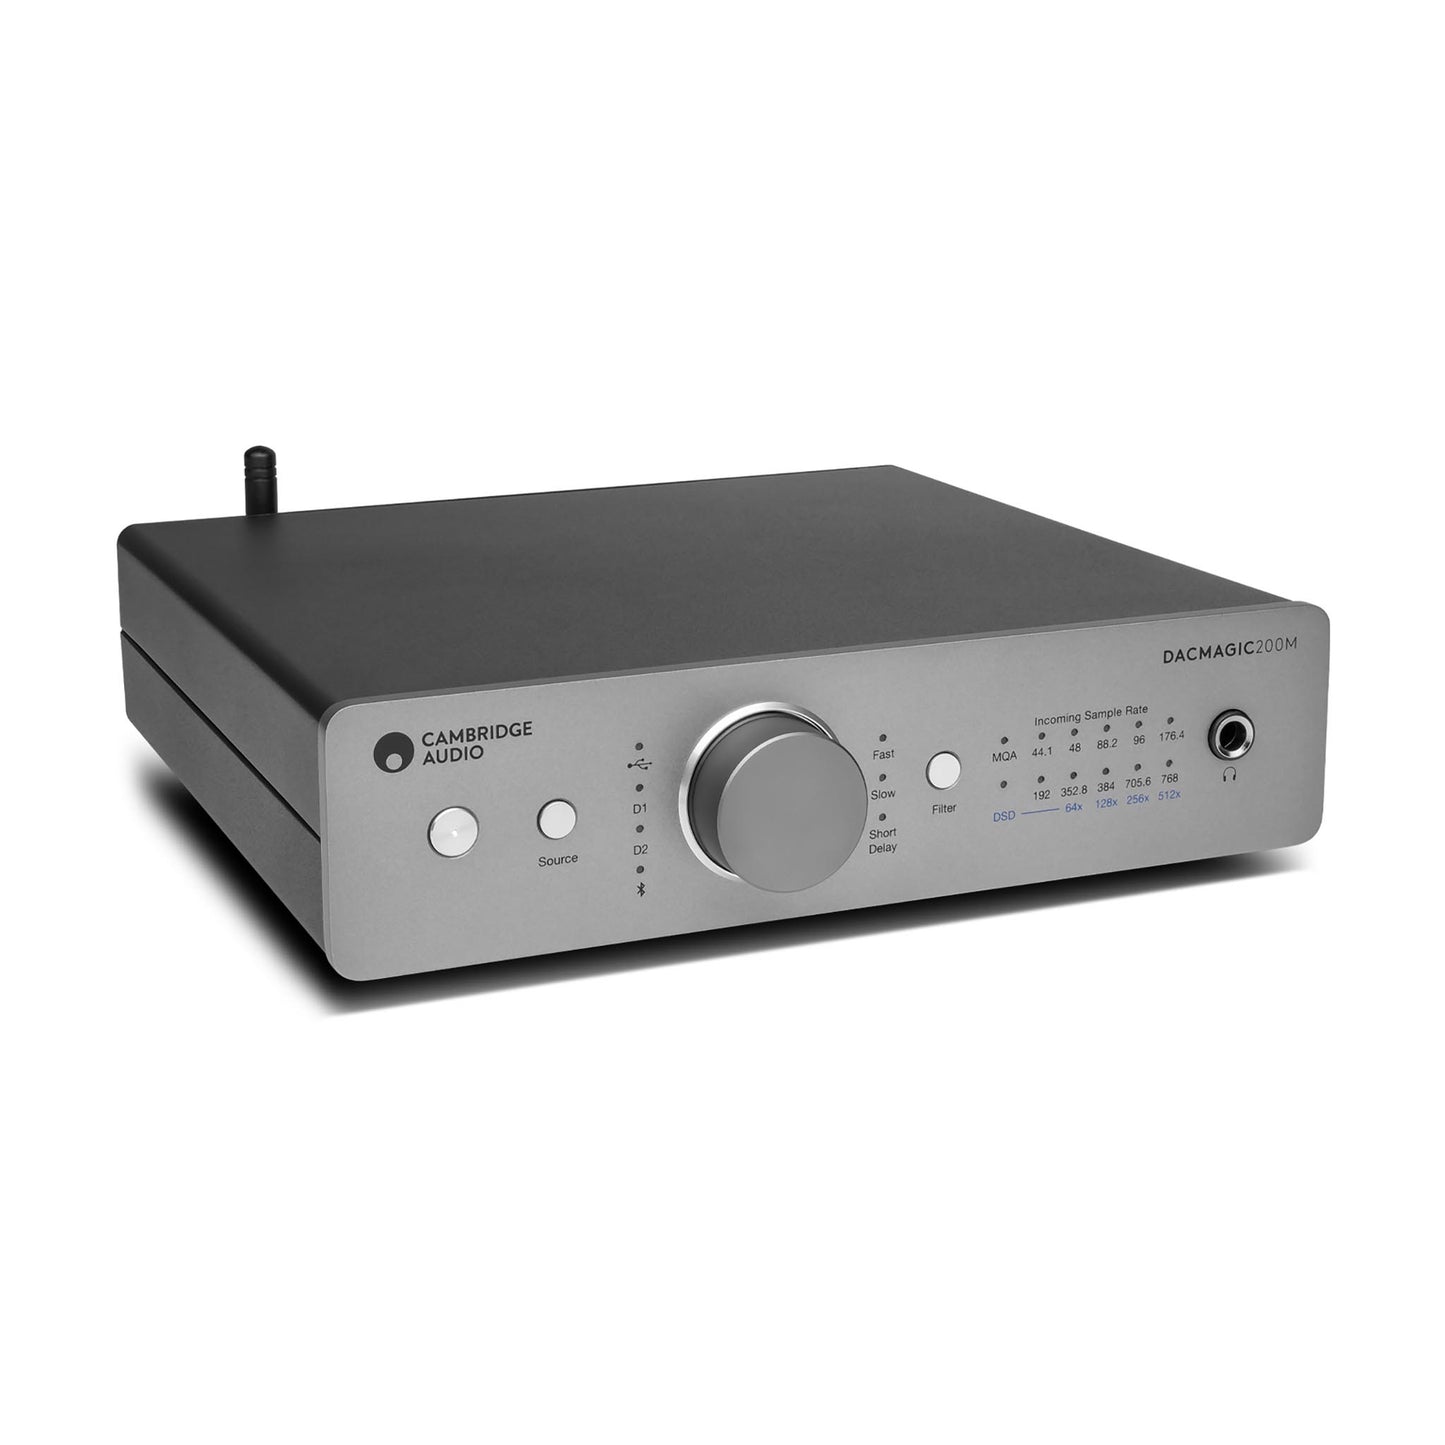 Cambridge Audio DacMagic 200M DAC / Preamp / Headphone Amplifier with Bluetooth